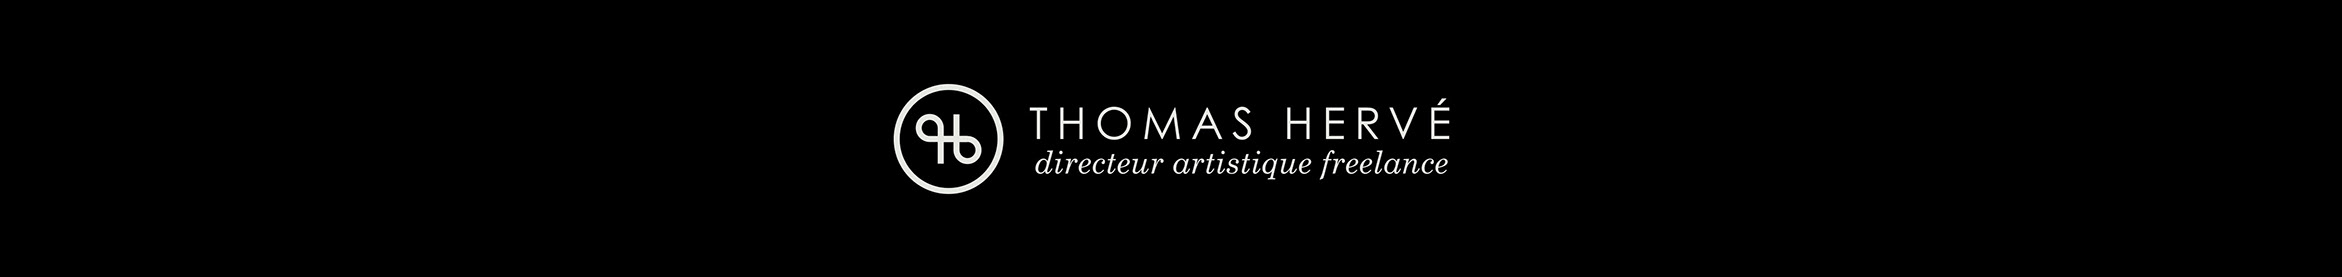 Thomas Hervé's profile banner